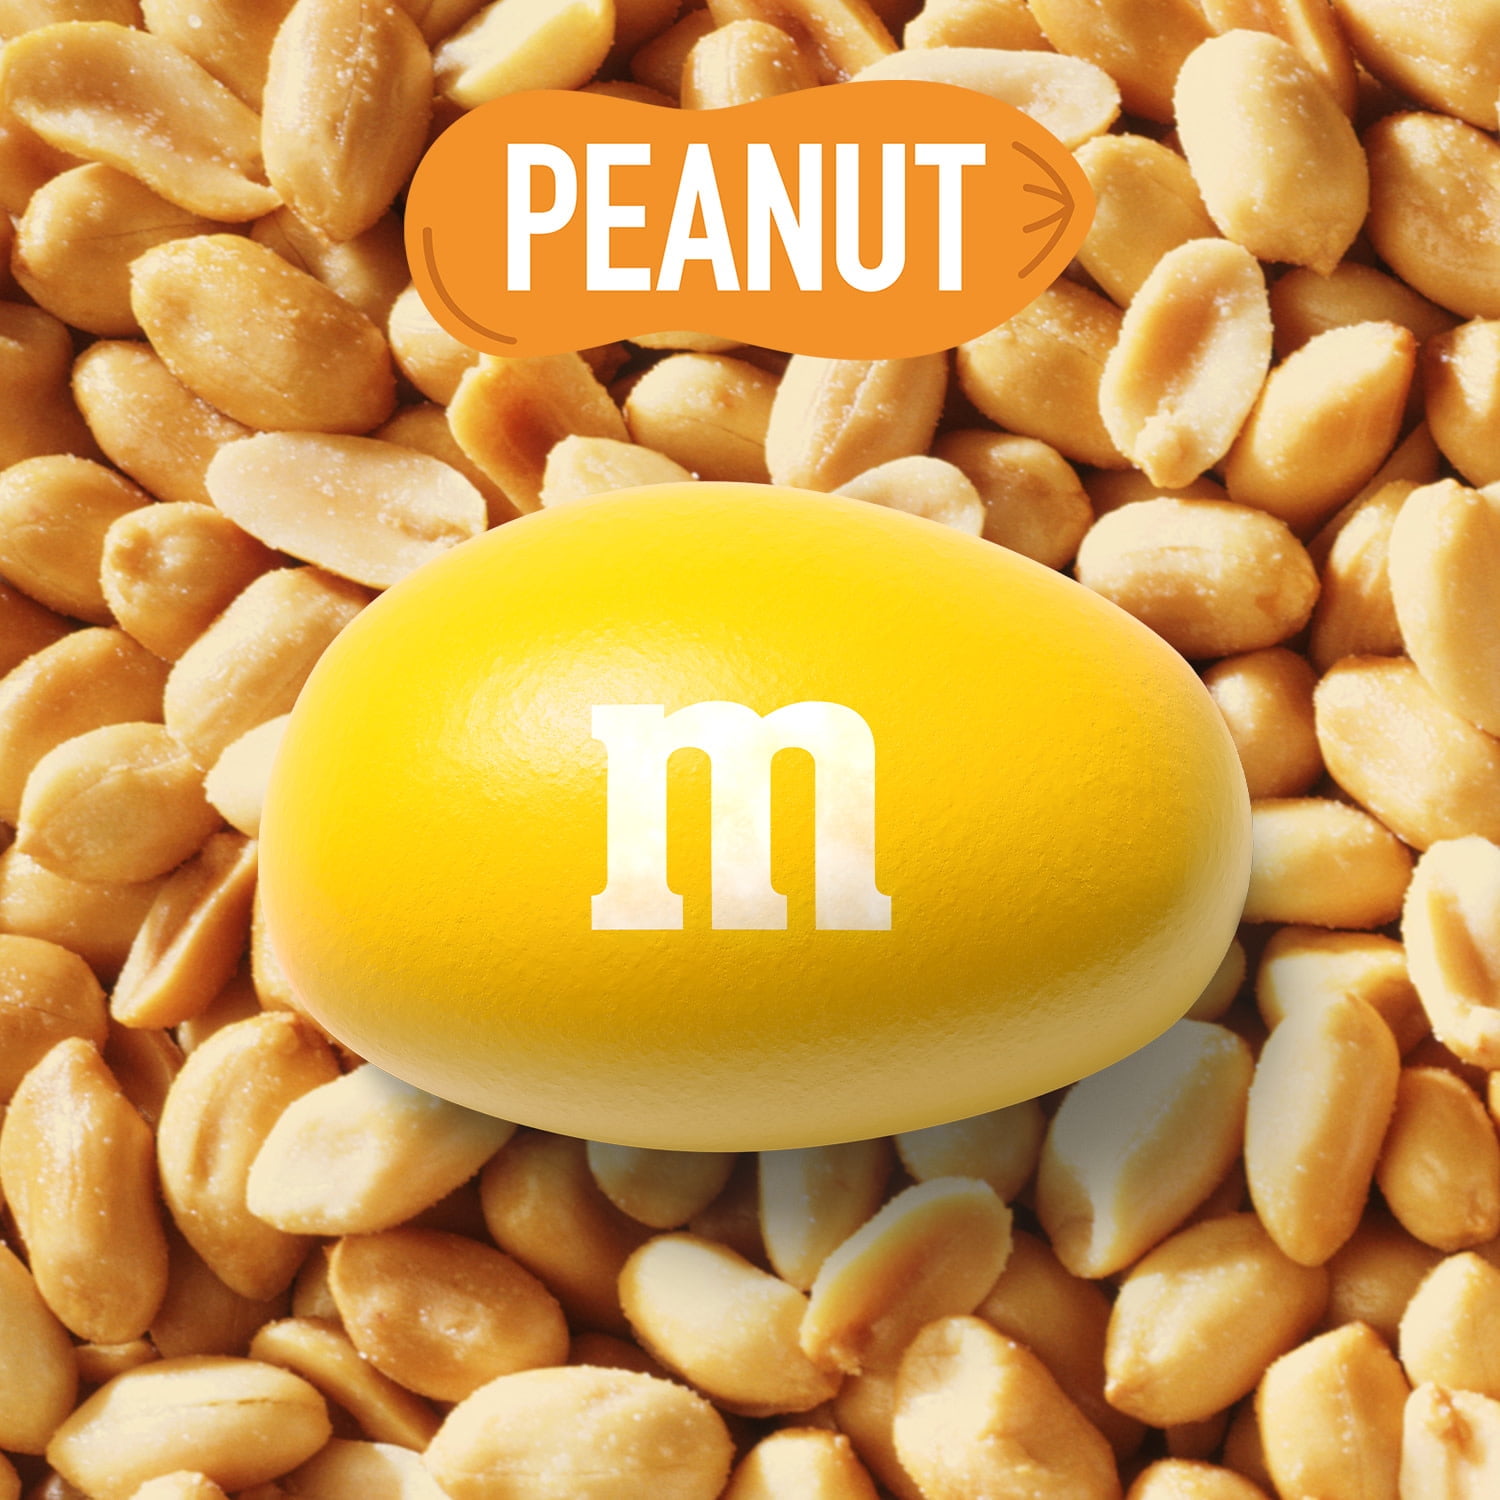 M&M S Peanut Milk Chocolate Sharing Size - 10.05 Oz Resealable